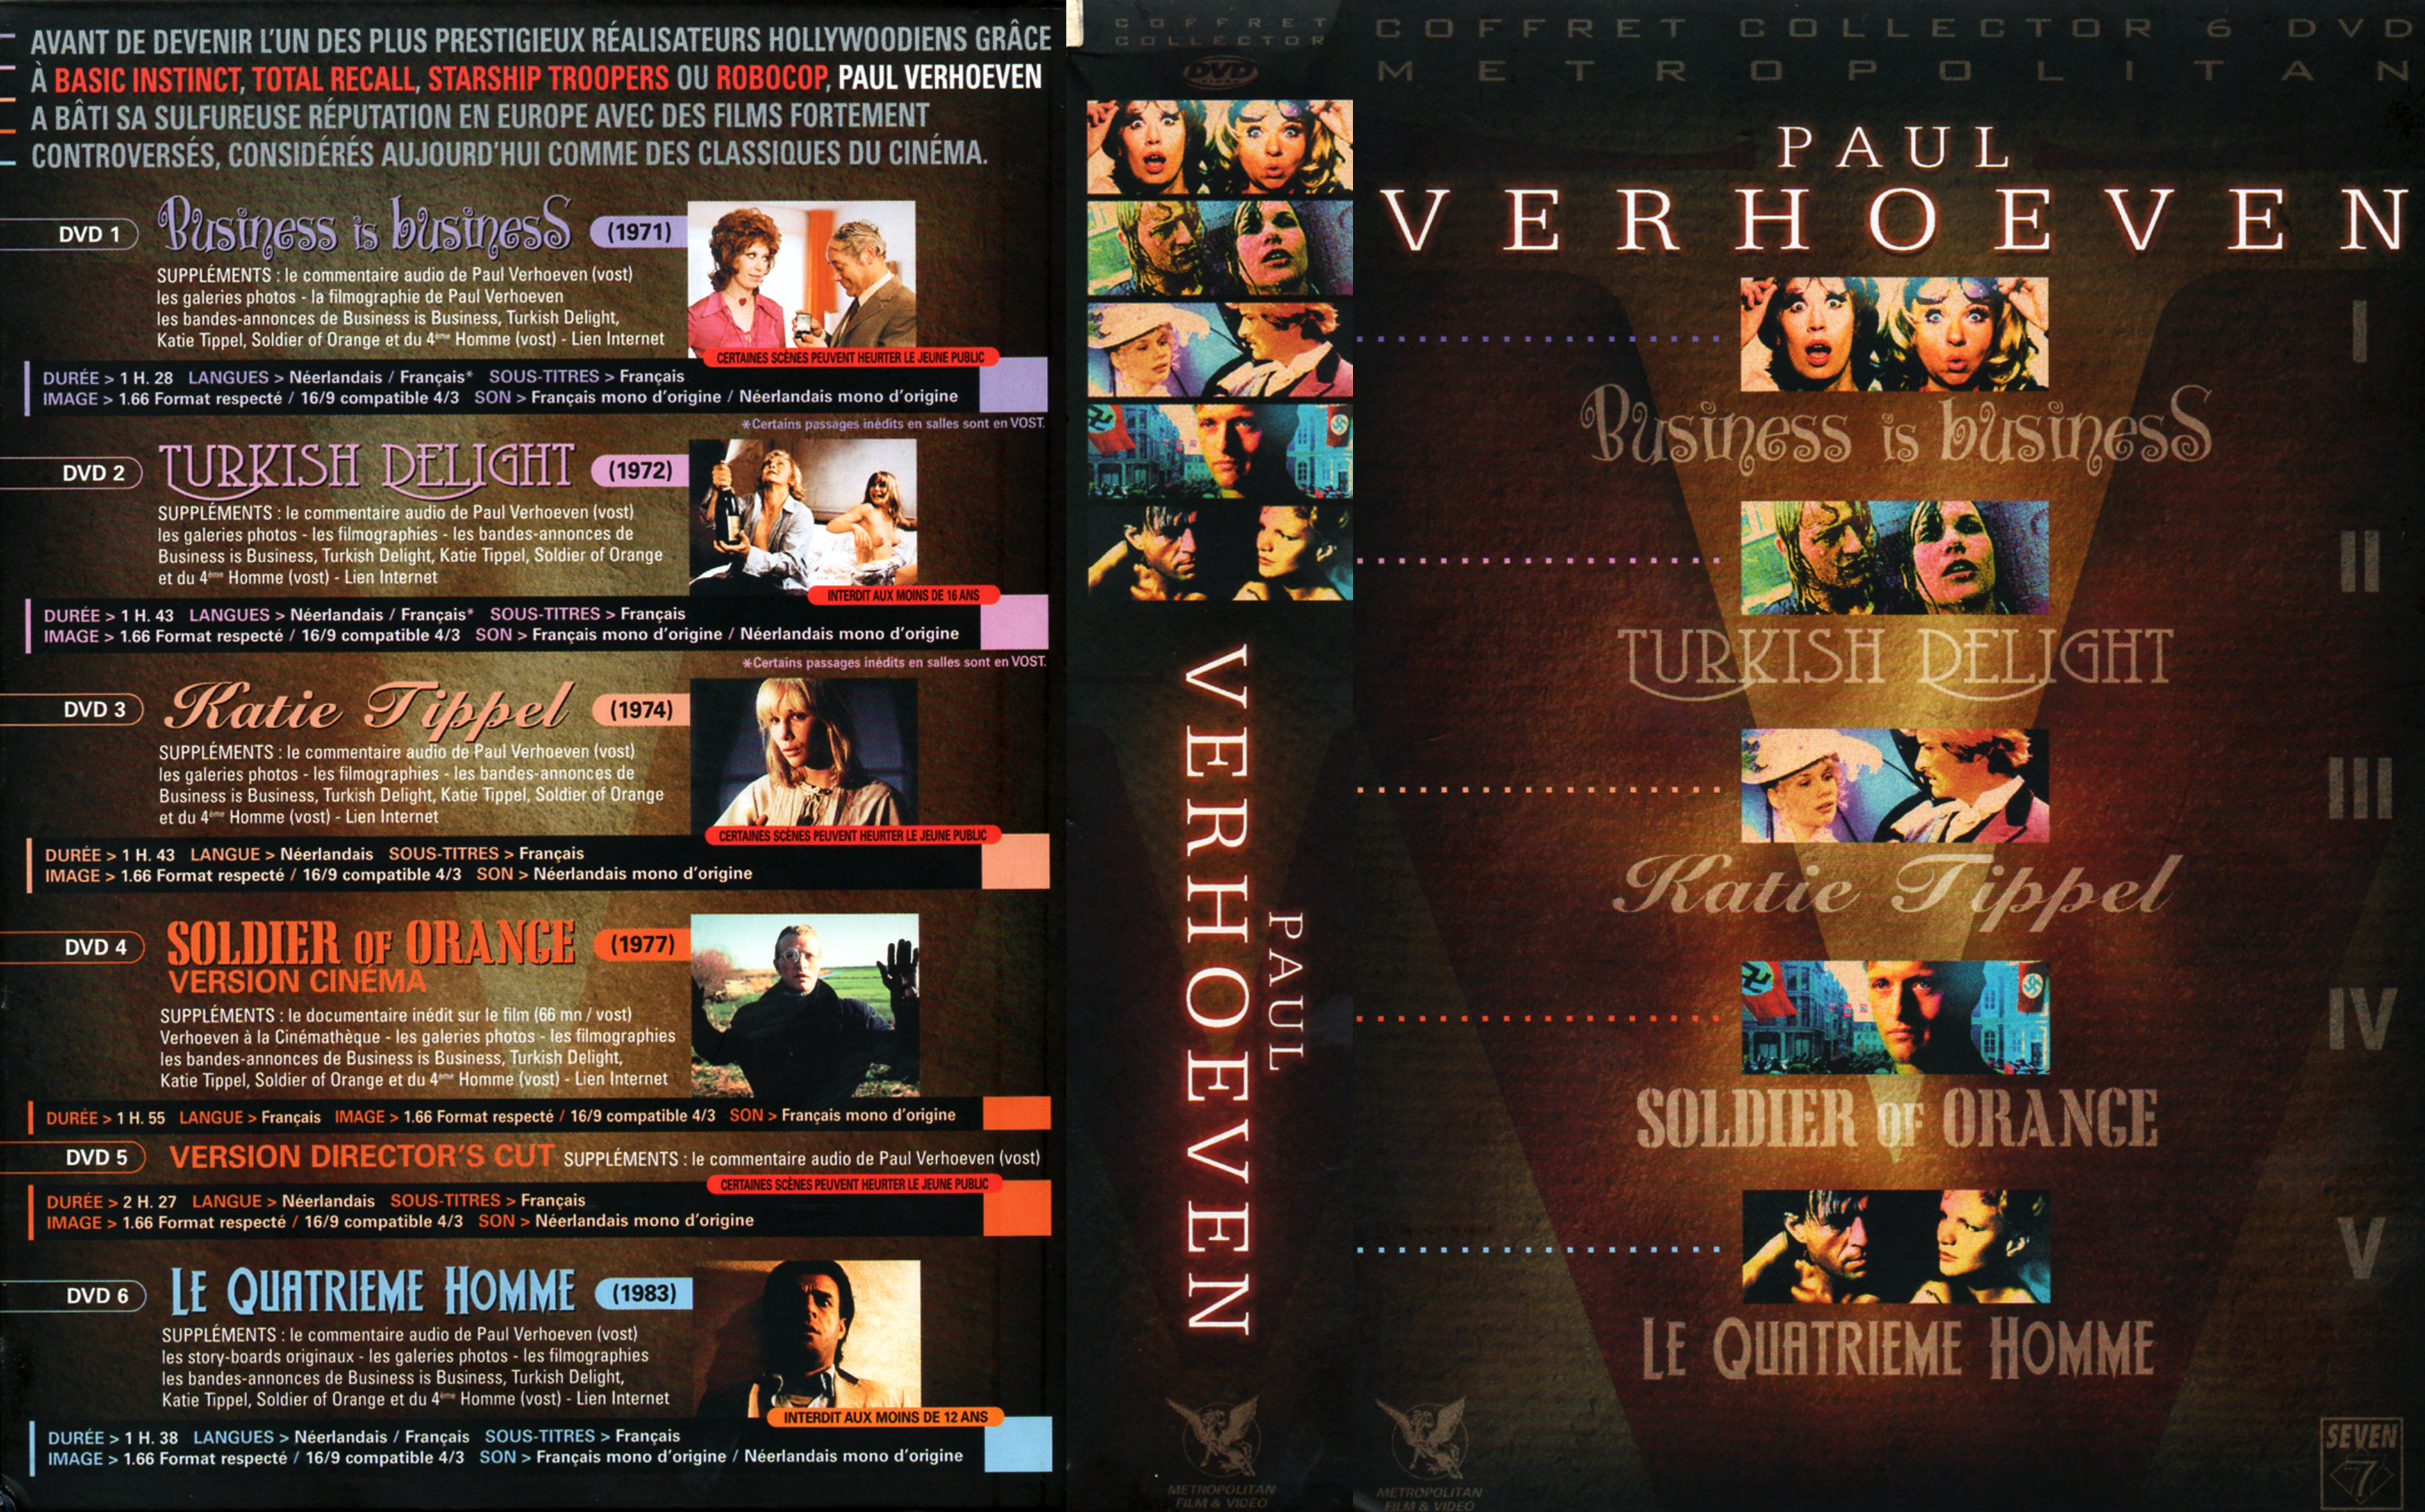 Jaquette DVD Paul Verhoeven COFFRET